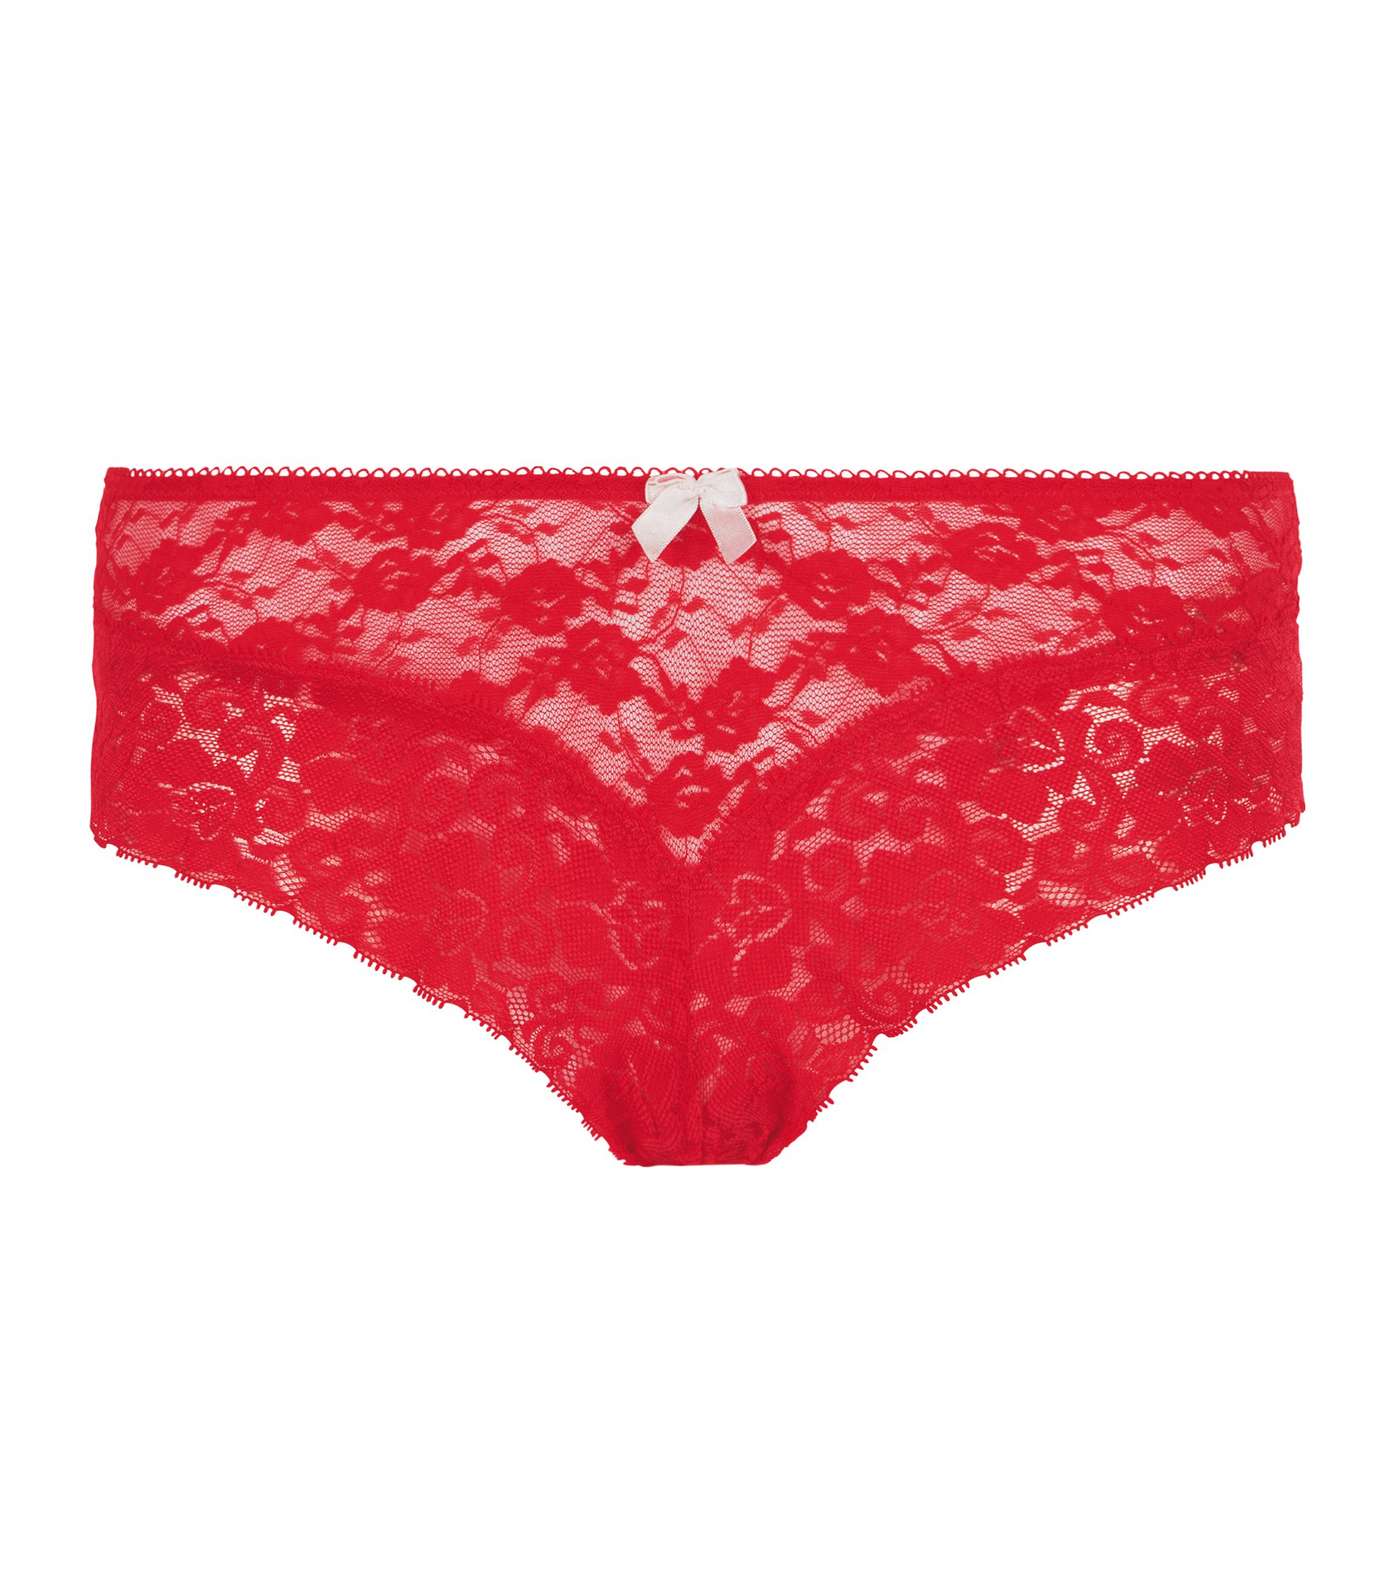 Red Lace Leg Brazilian Briefs Image 3